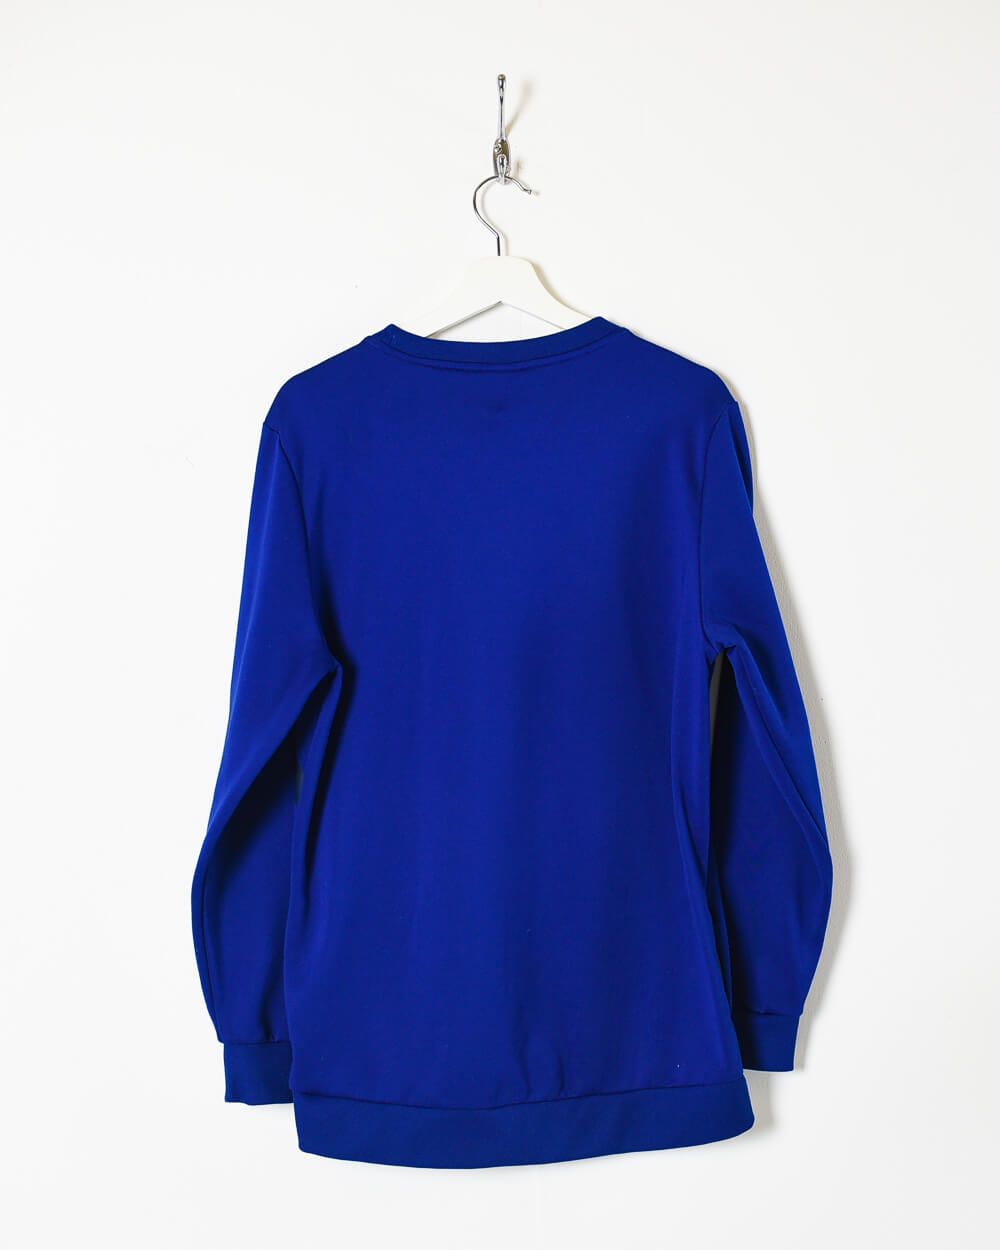 Blue Reebok Sweatshirt - Small